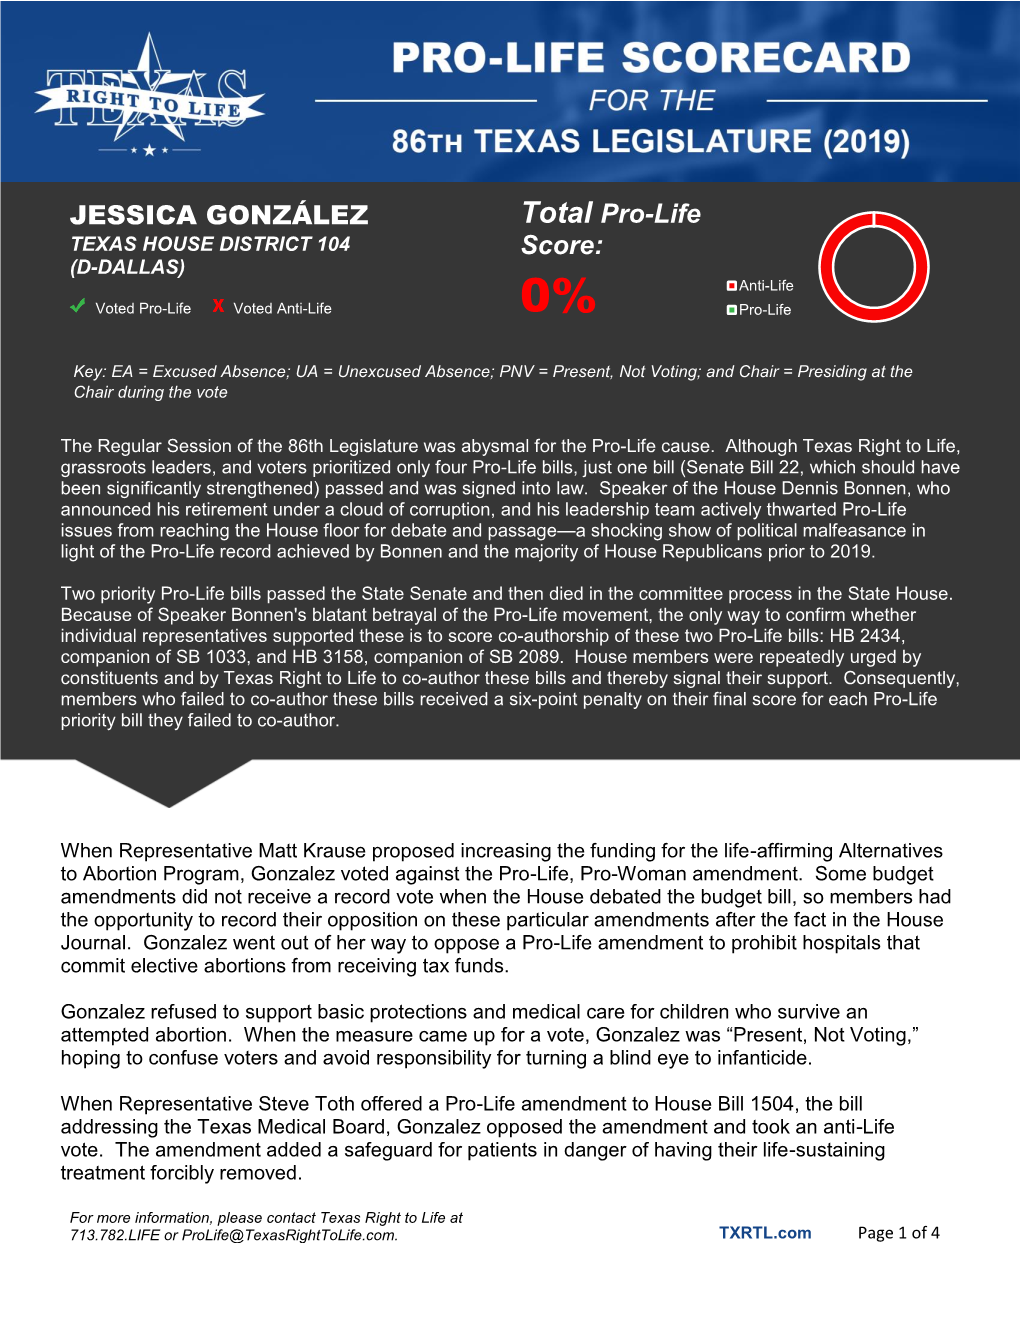 JESSICA GONZÁLEZ Total Pro-Life Score